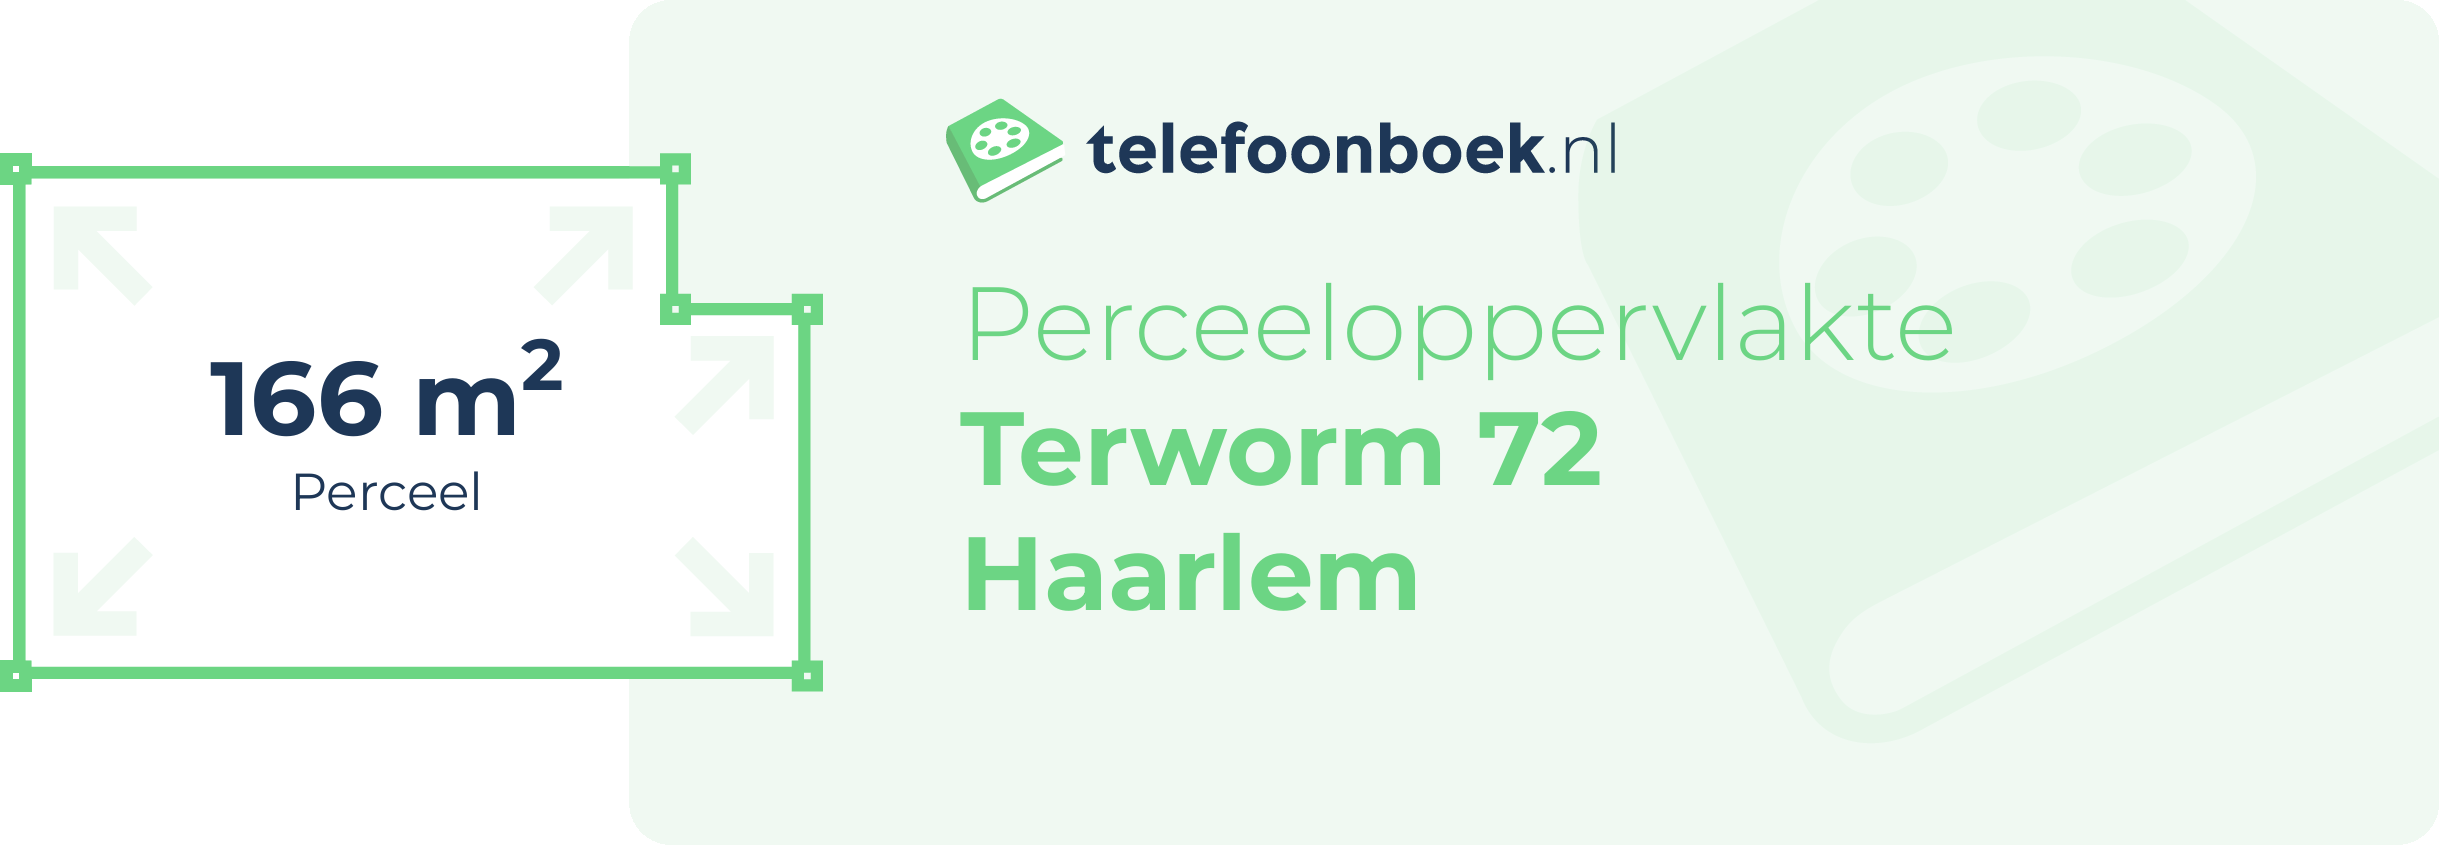 Perceeloppervlakte Terworm 72 Haarlem